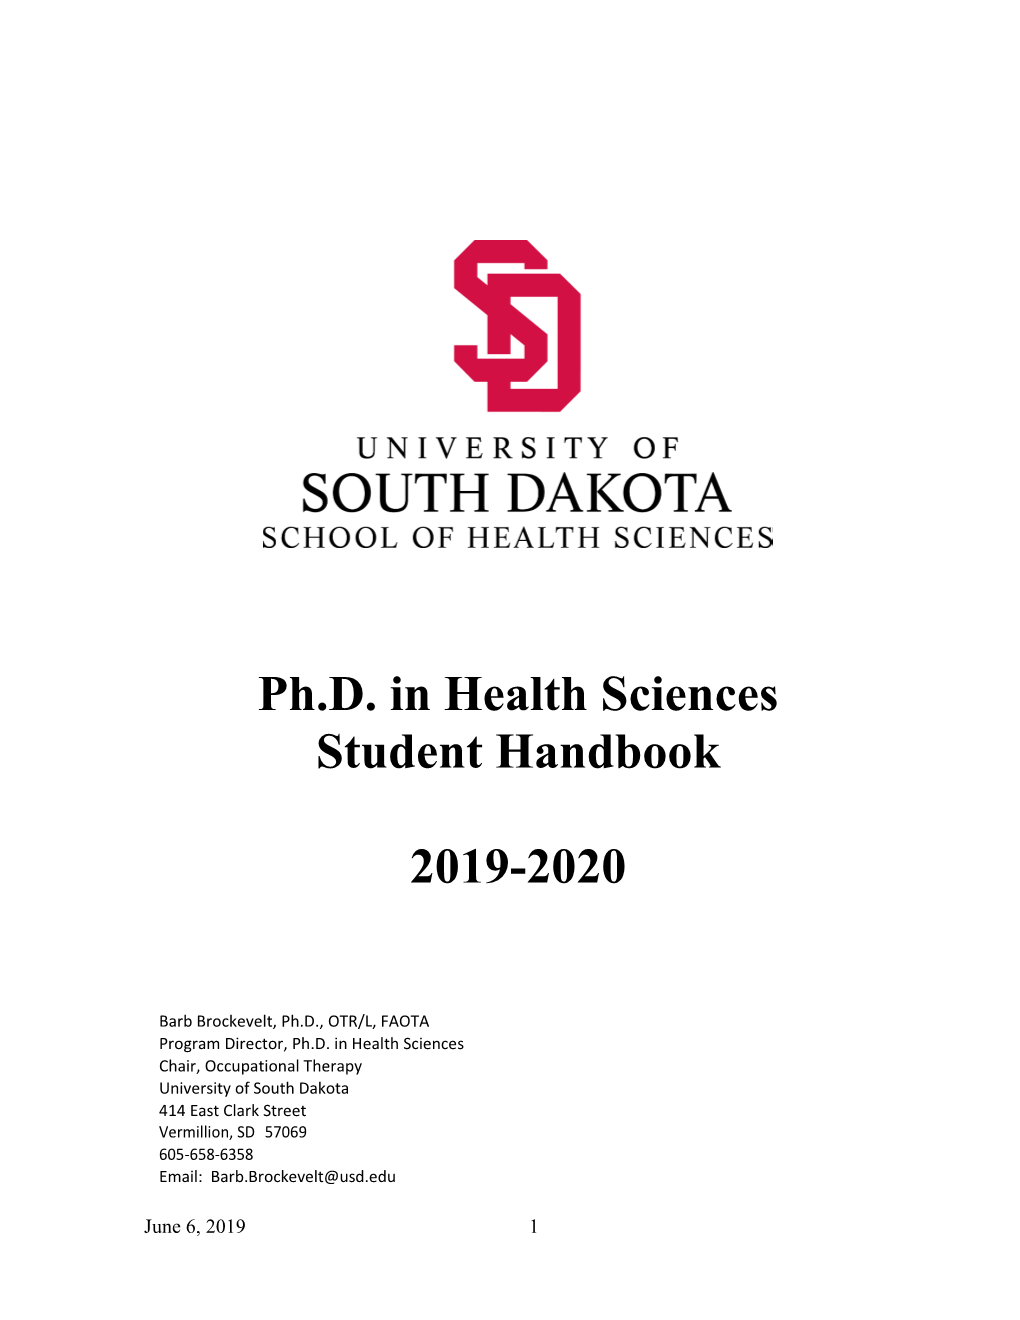 Ph.D. in Health Sciences Student Handbook 2019-2020